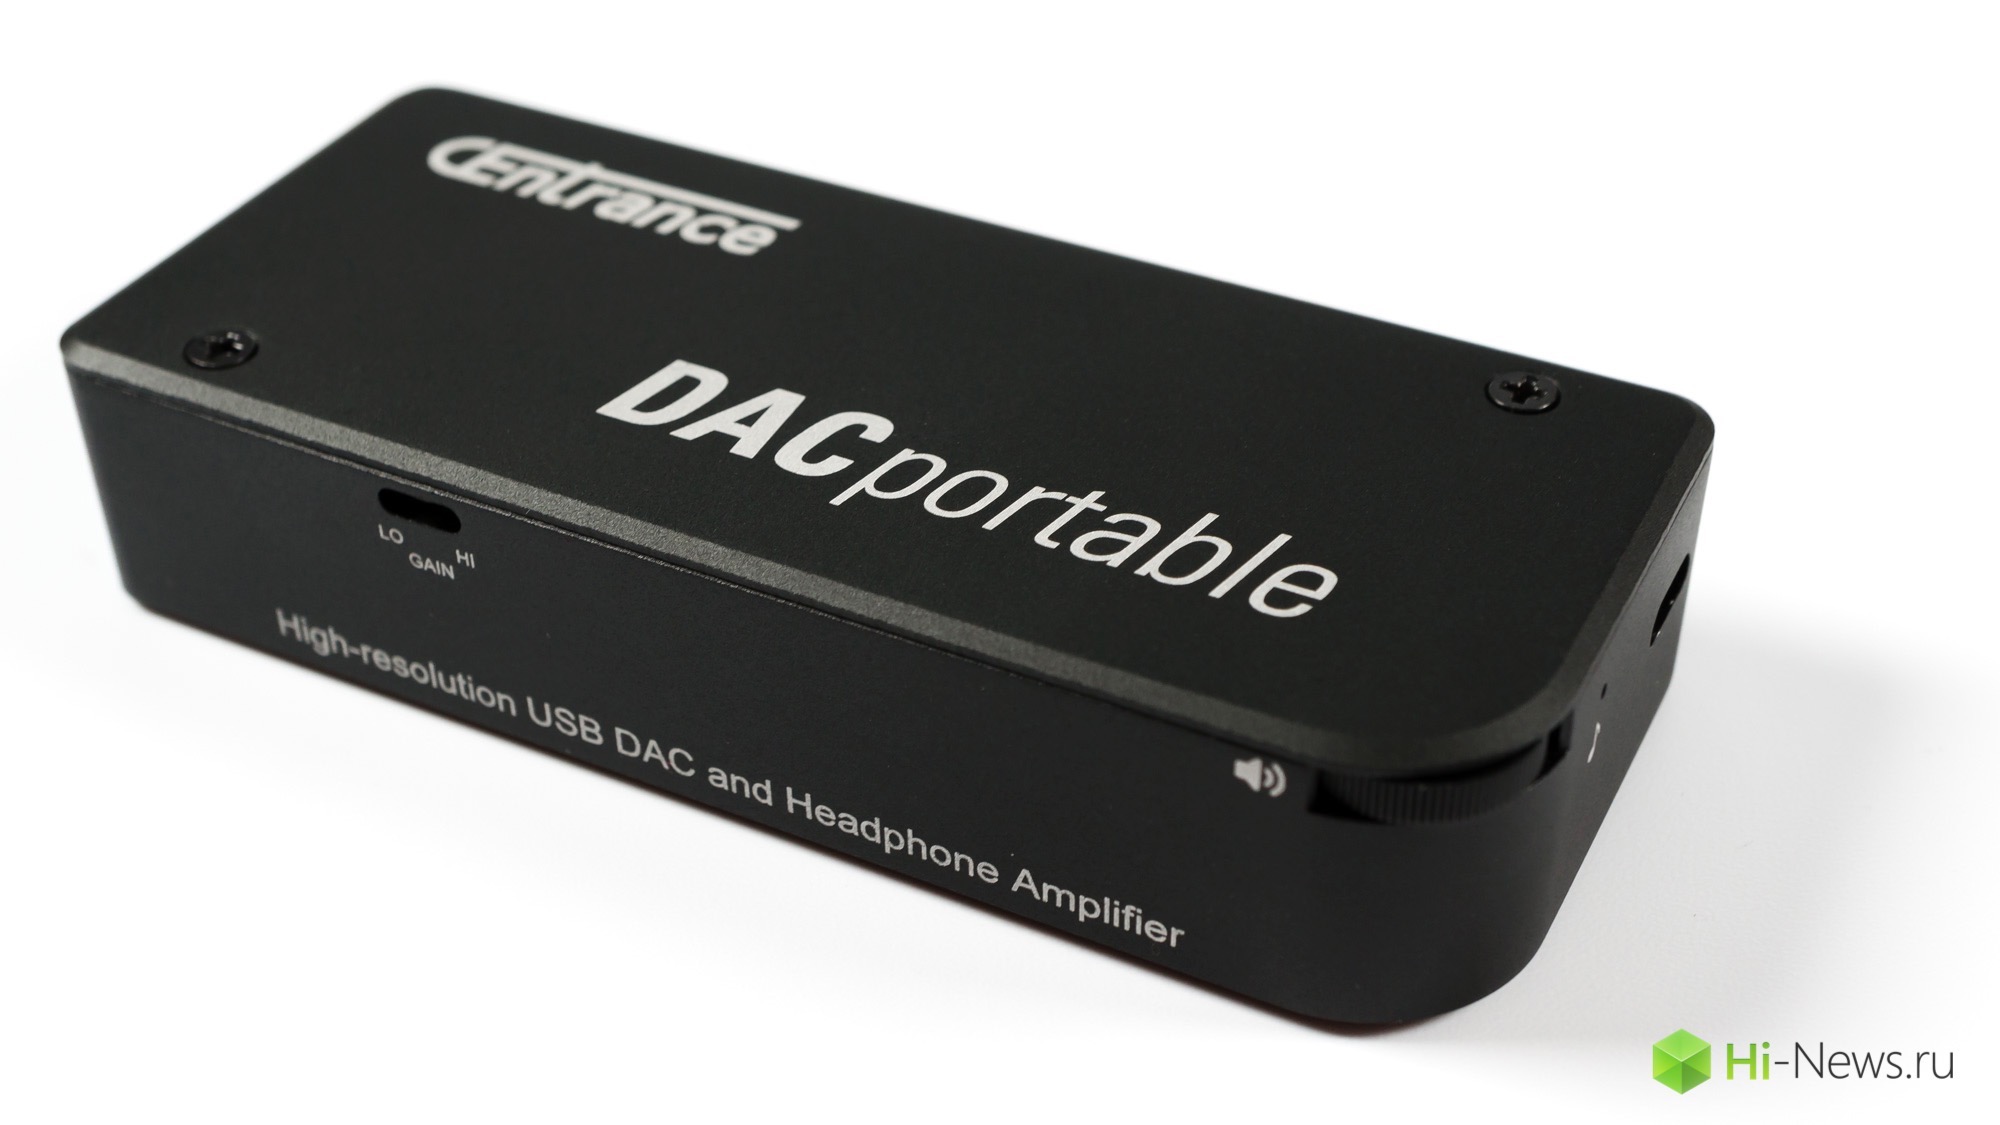 Browse portable DAC and headphone amplifier CEnrance DACPortable